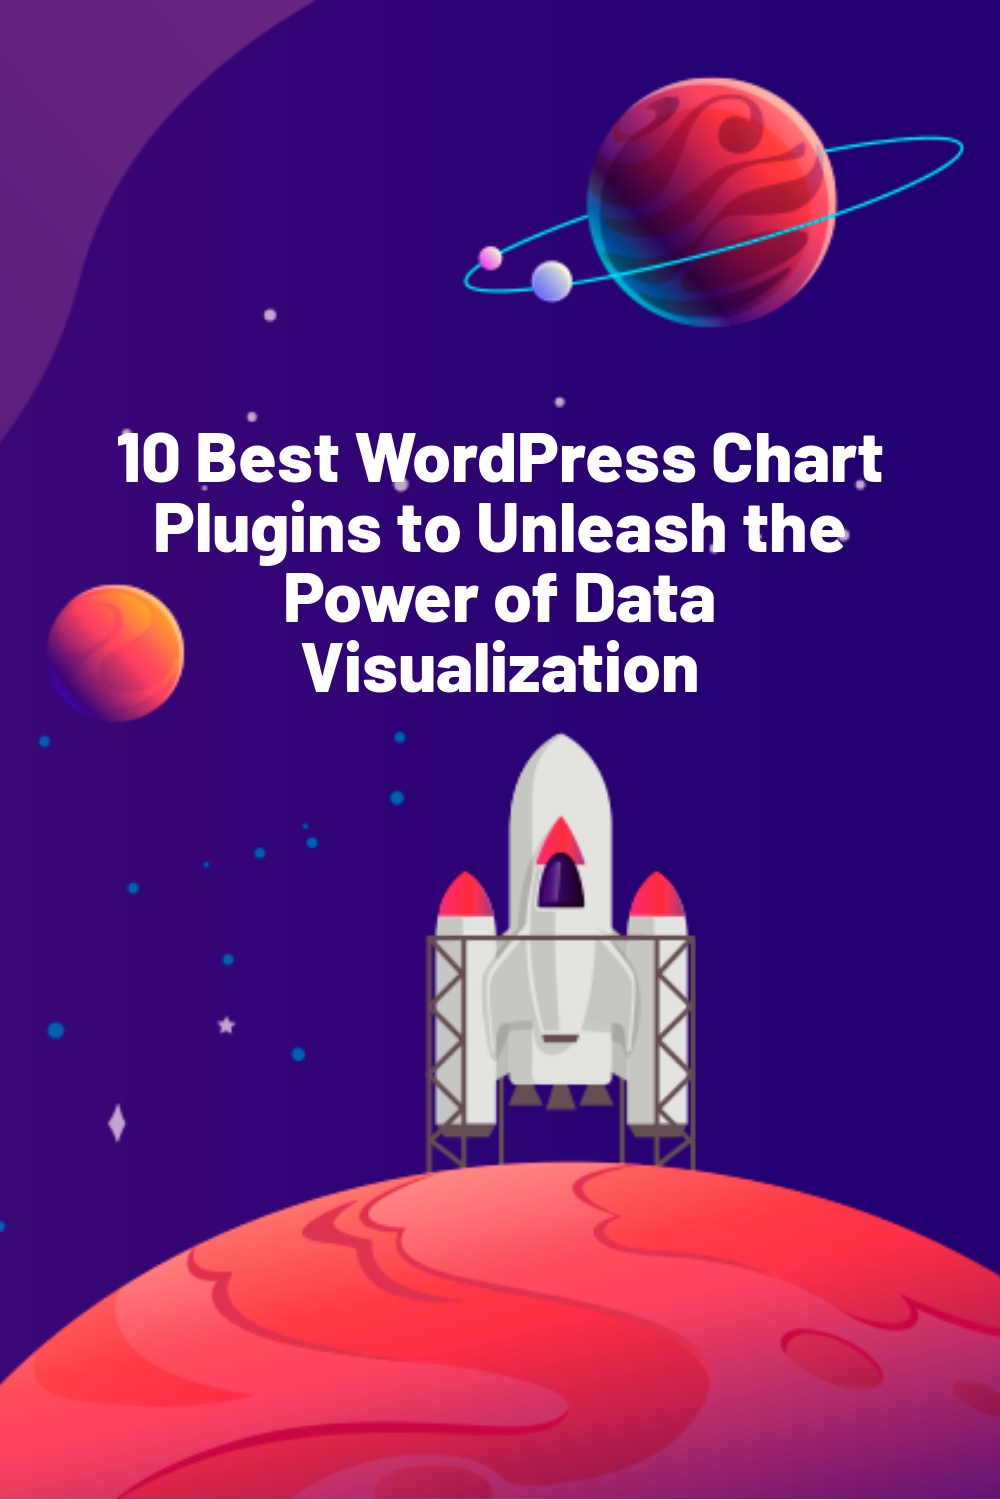 10 Best WordPress Chart Plugins to Unleash the Power of Data Visualization